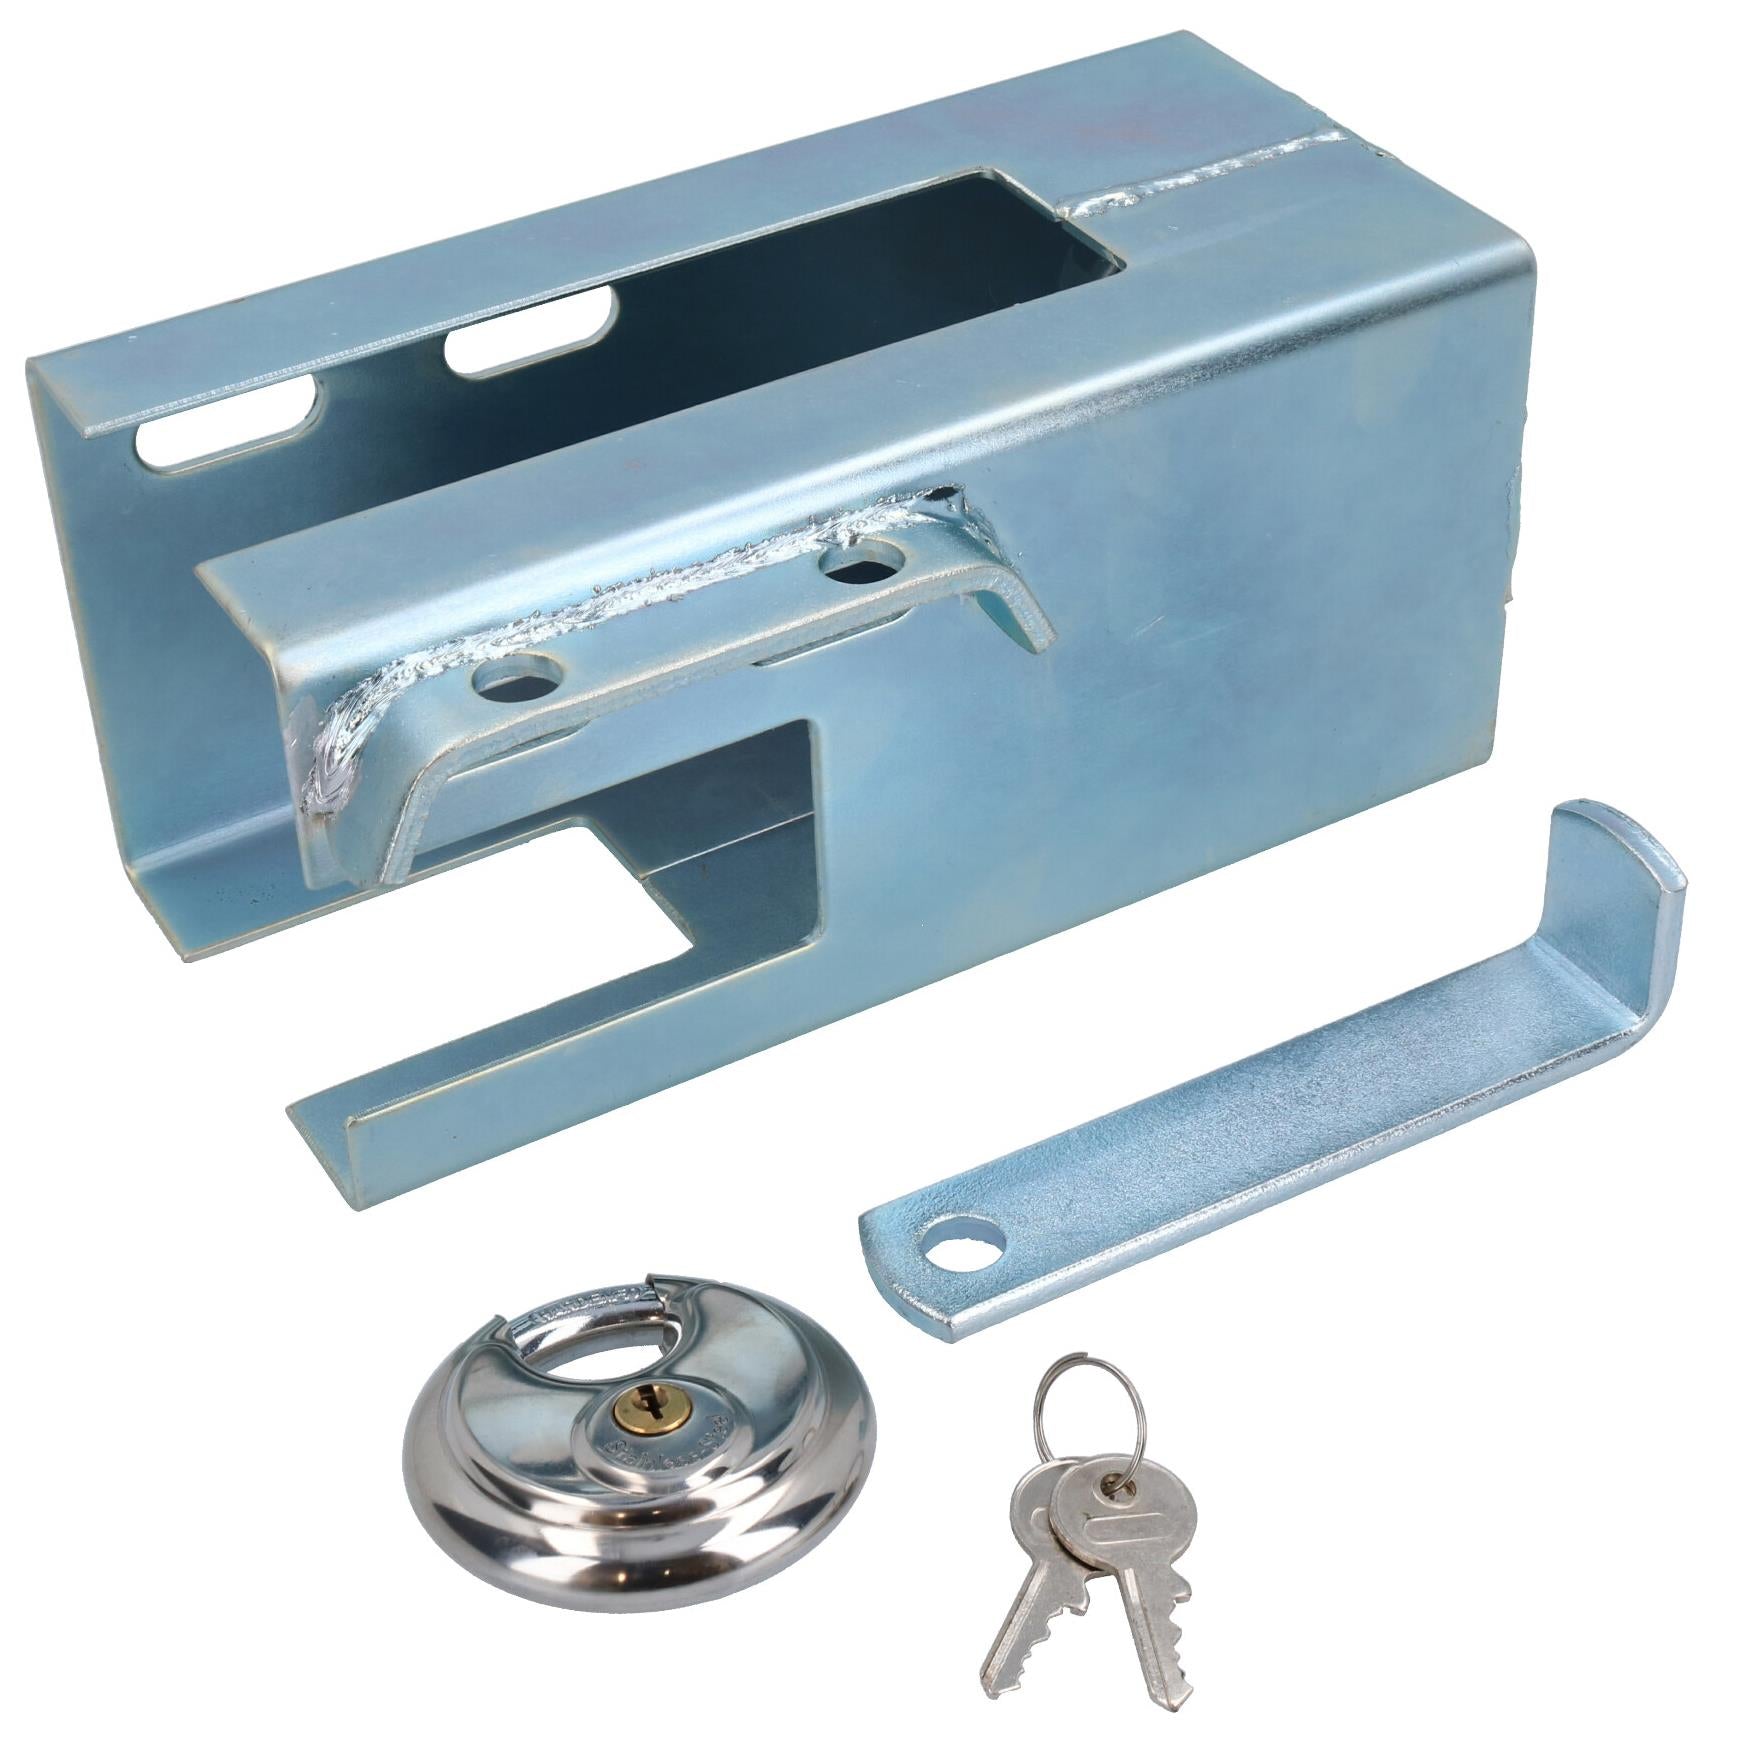 Trailer / Caravan Coupling Hitch Lock Steel Box Security Safe Type TR104